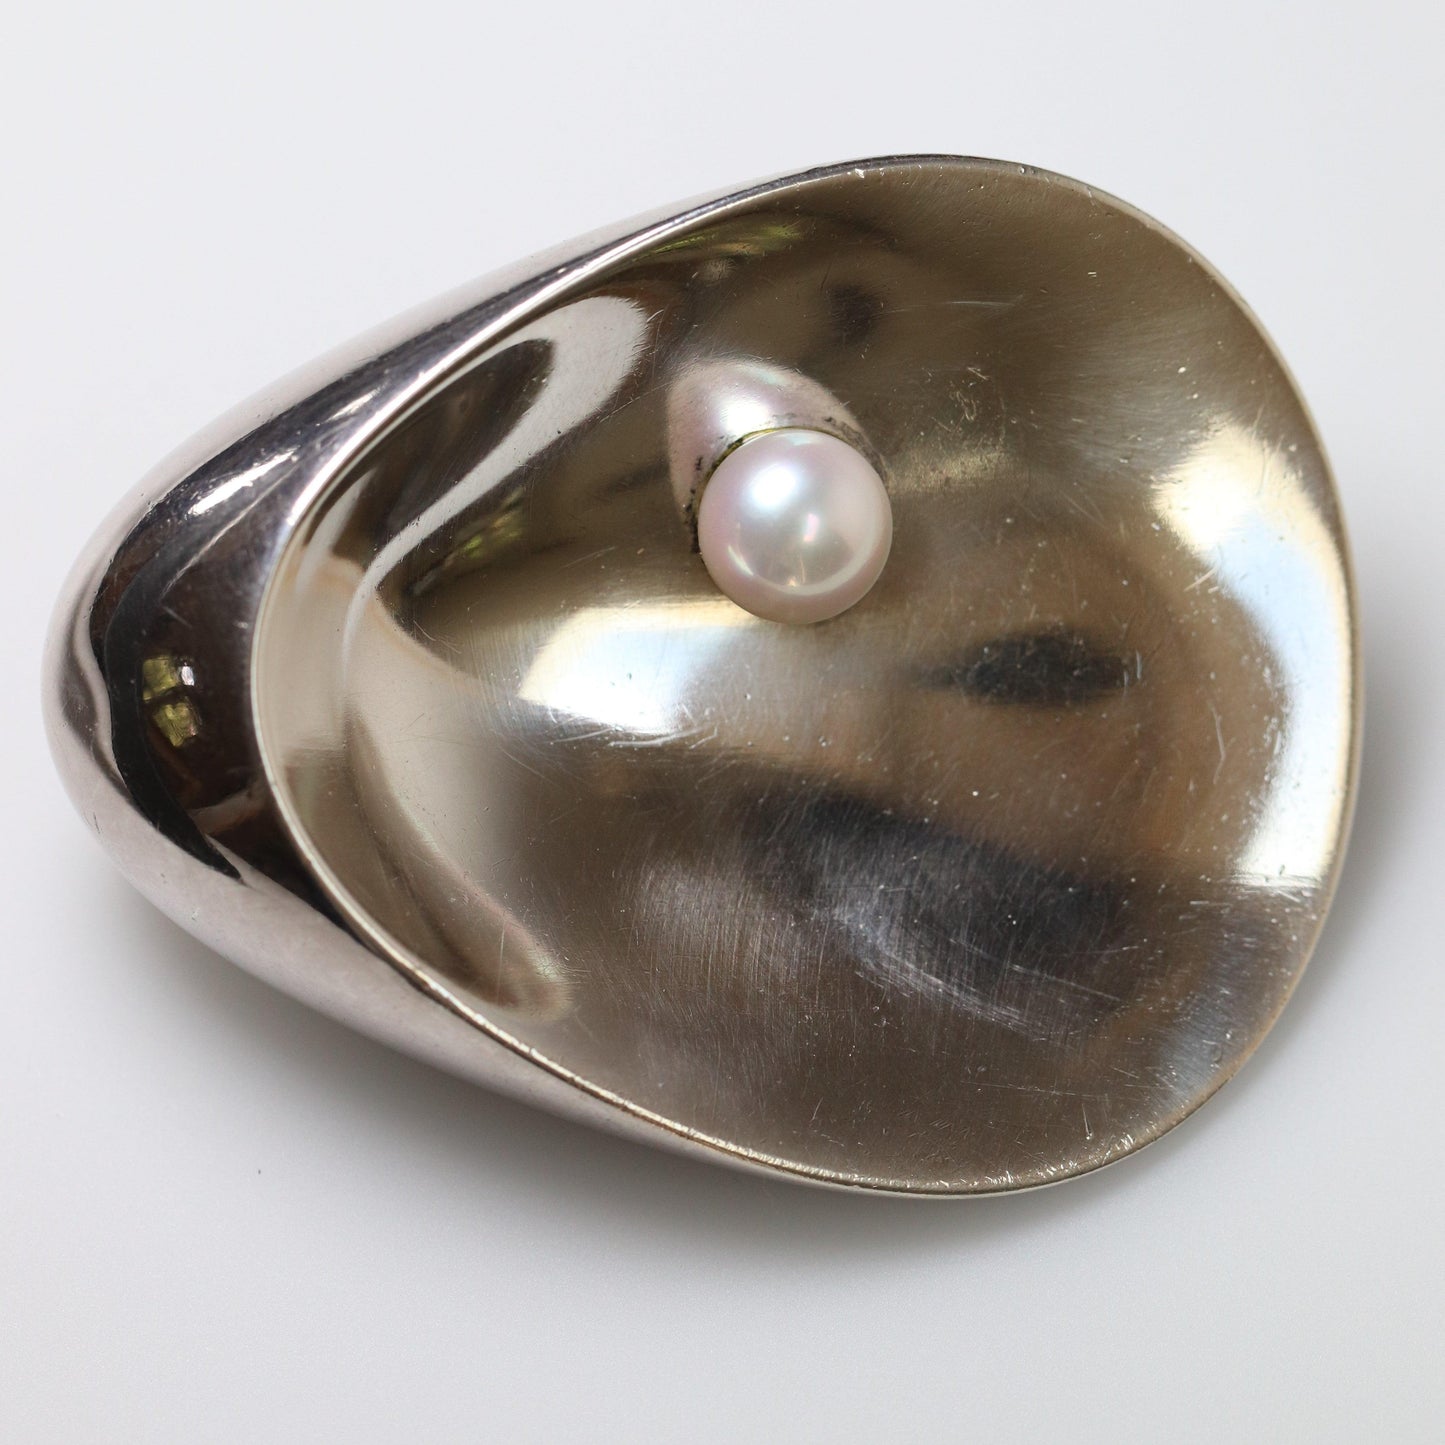 Georg Jensen Jewelry | Shell and Pearl Modernist Silver Vintage Brooch 328 - Carmel Fine Silver Jewelry